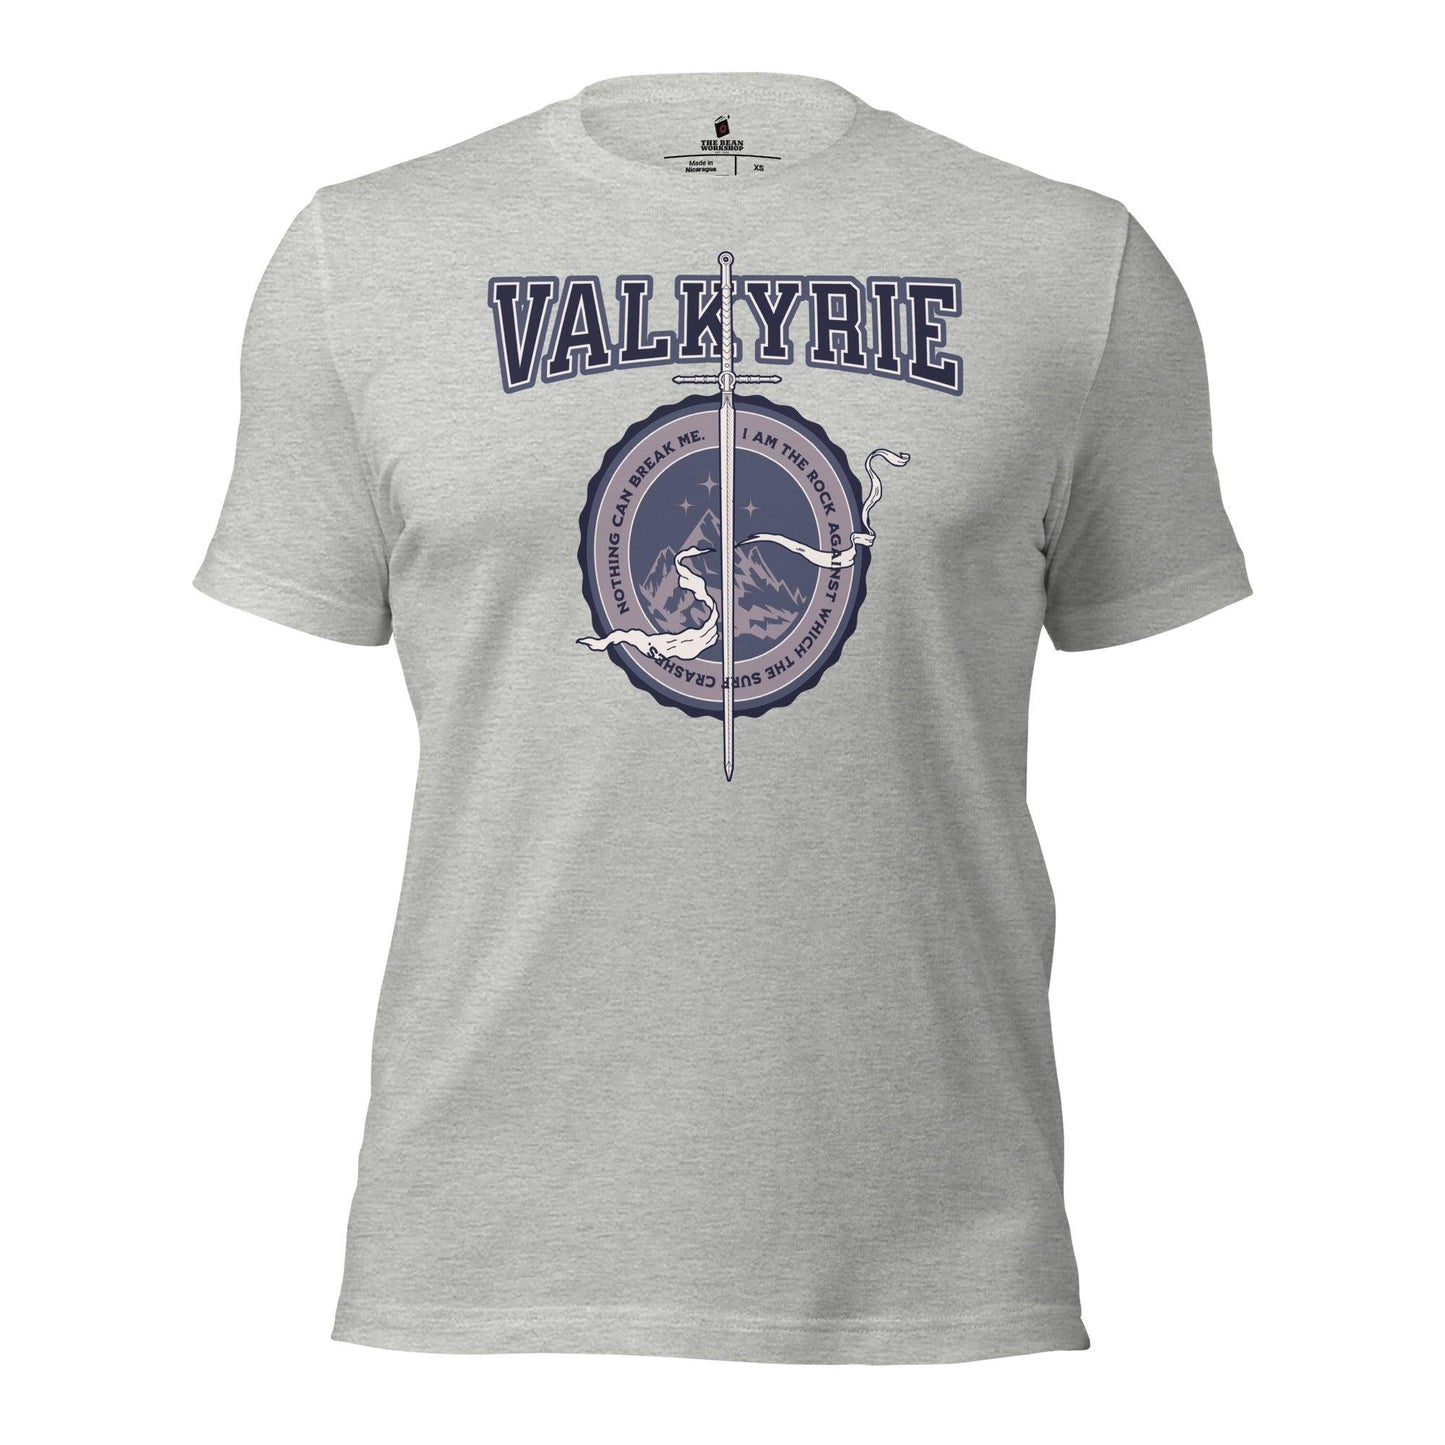 Valkyrie T-Shirt - The Bean Workshop - a court of thorns and roses, acotar, feyre archeron, rhysand, sarah j maas, t-shirt